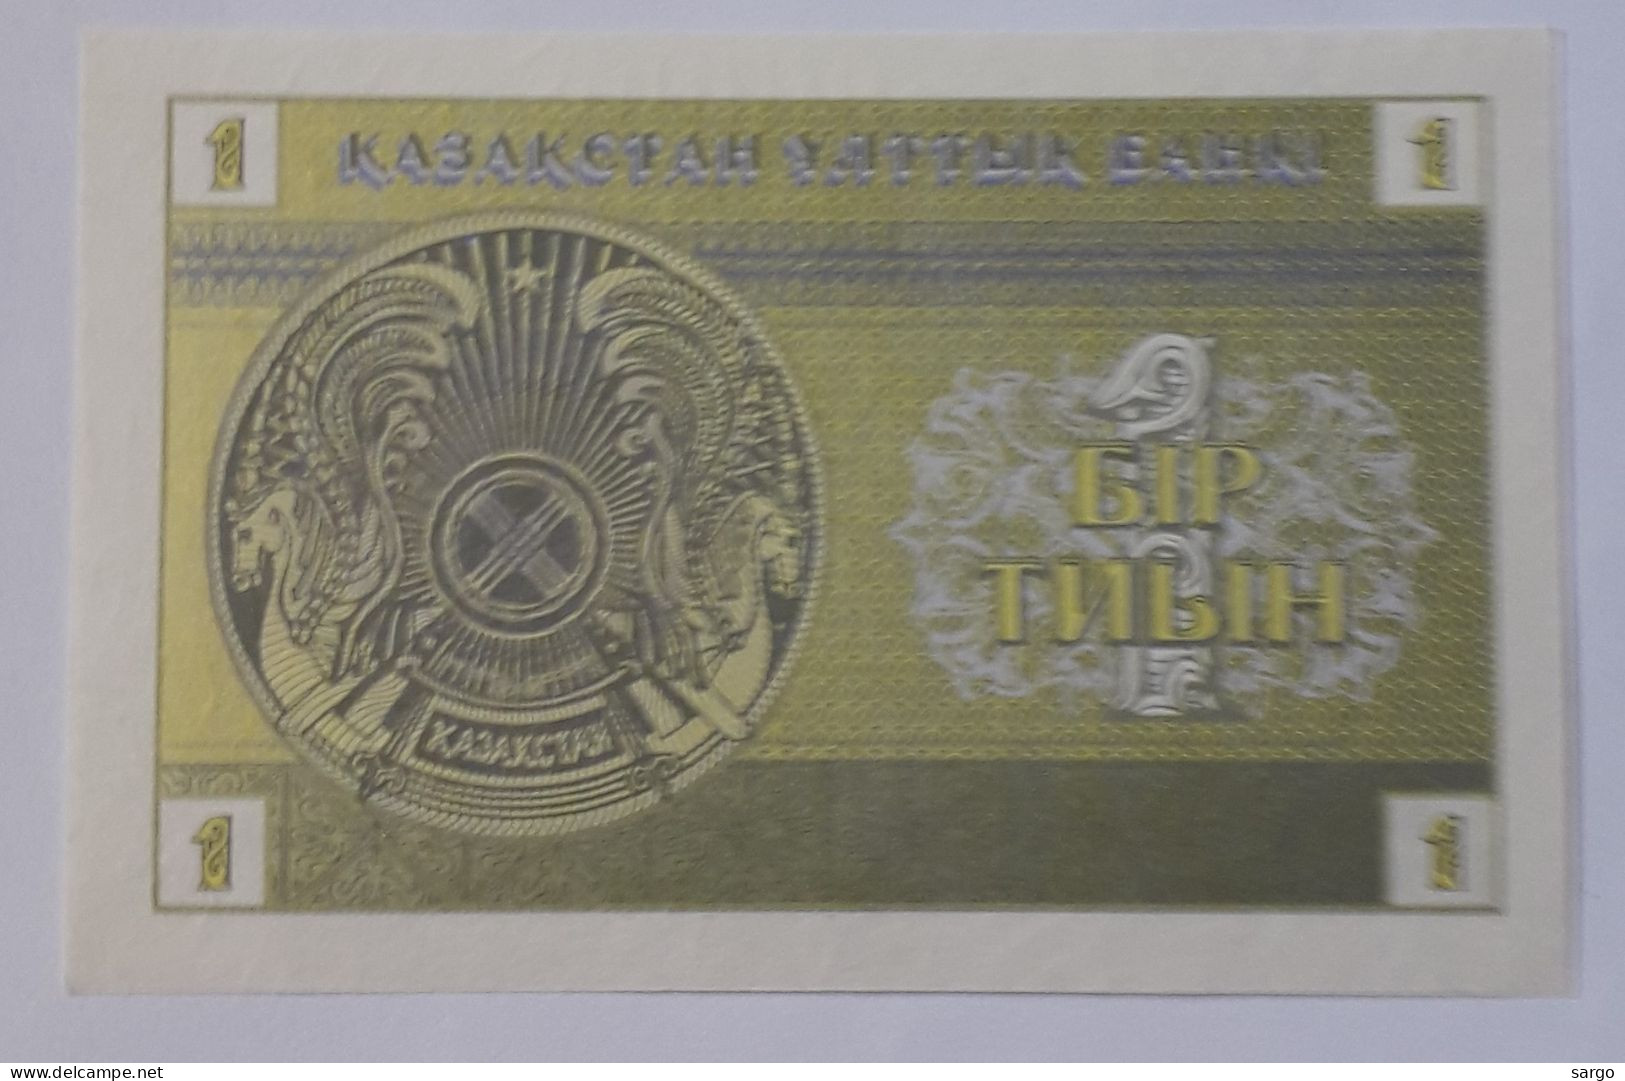 KAZAKHSTAN - 1 TYIN - 1993 - P 1 - UNC - BANKNOTES - PAPER MONEY - CARTAMONETA - - Kasachstan